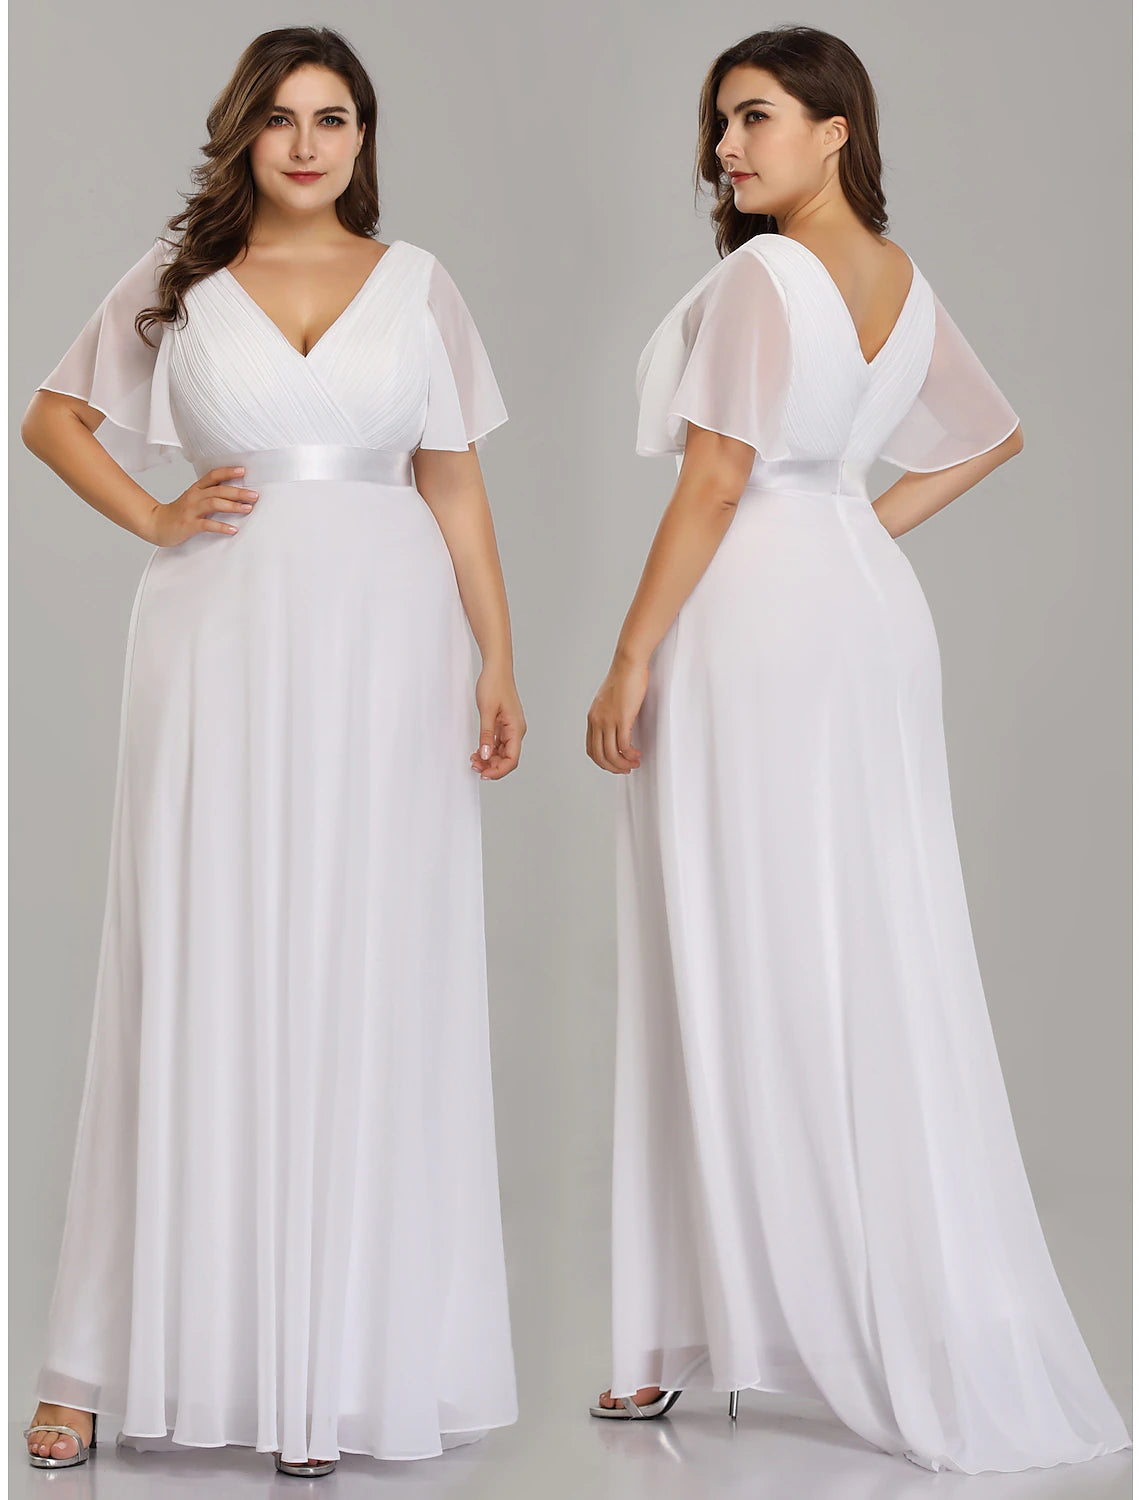 A-Line Empire Fall Wedding Guest Dress For Bridesmaid Plus Size Formal Evening Dress V Neck Short Sleeve Floor Length Chiffon